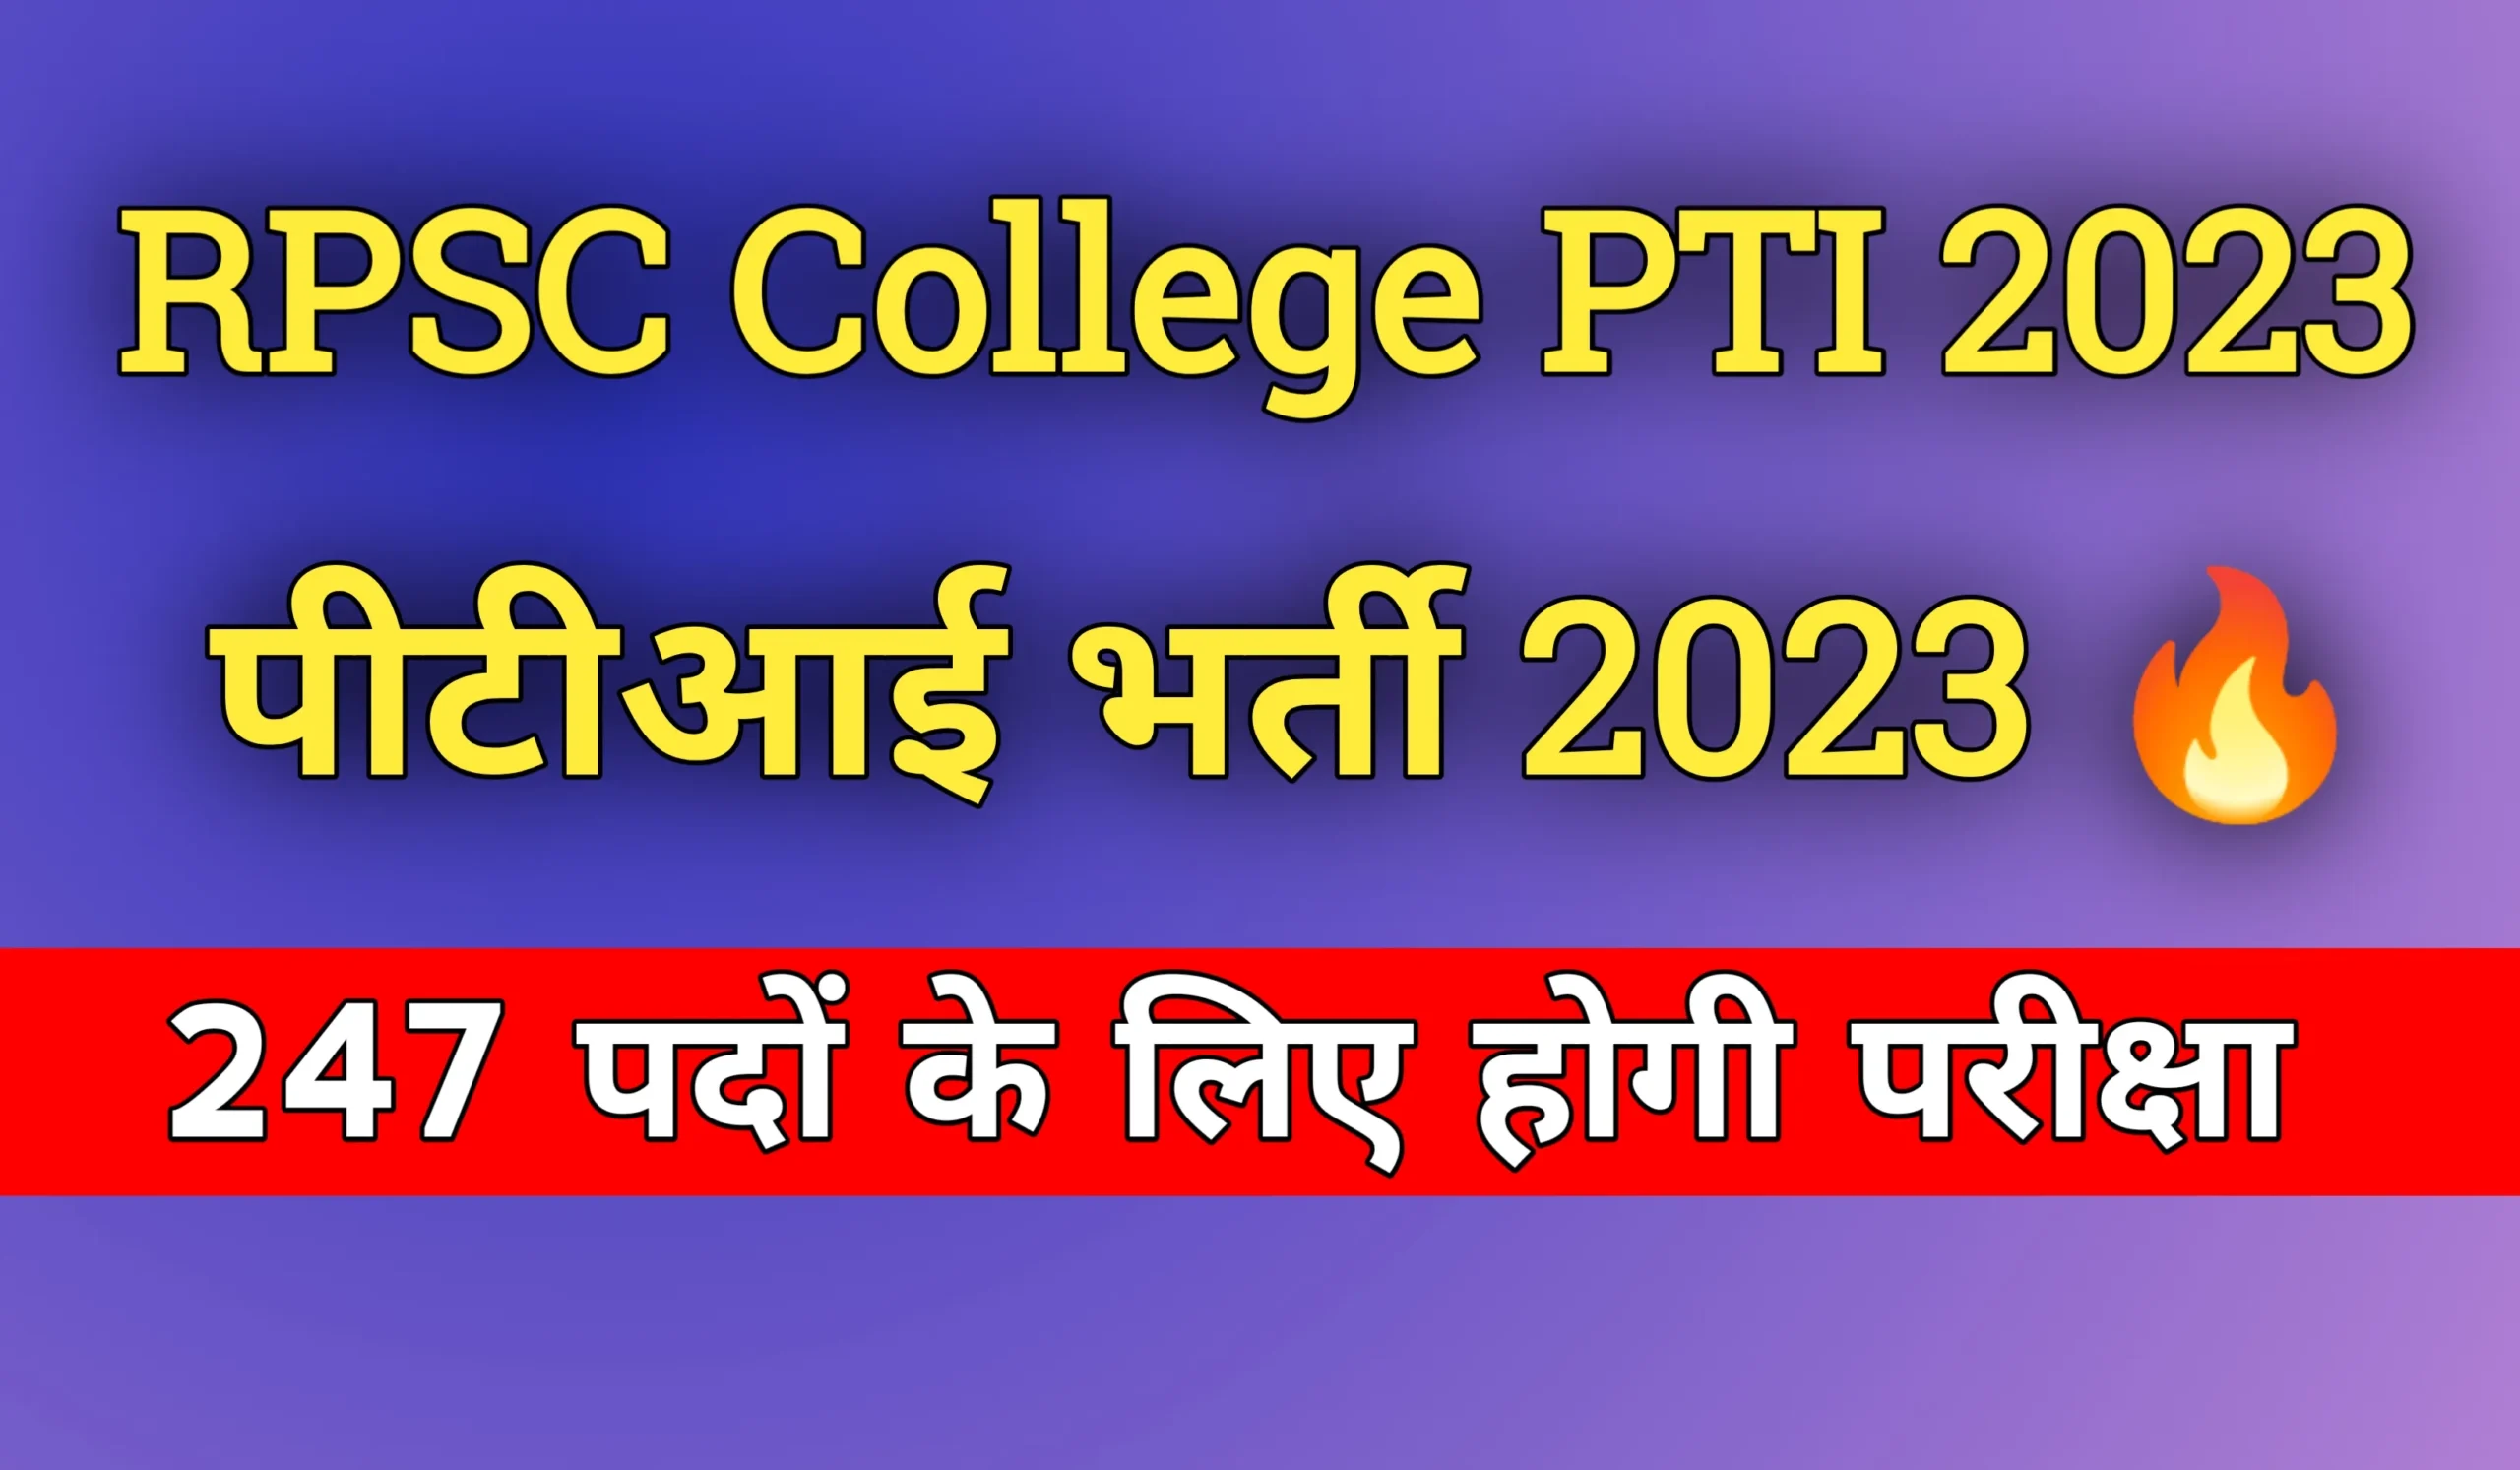 RPSC College PTI Recruitment 2023